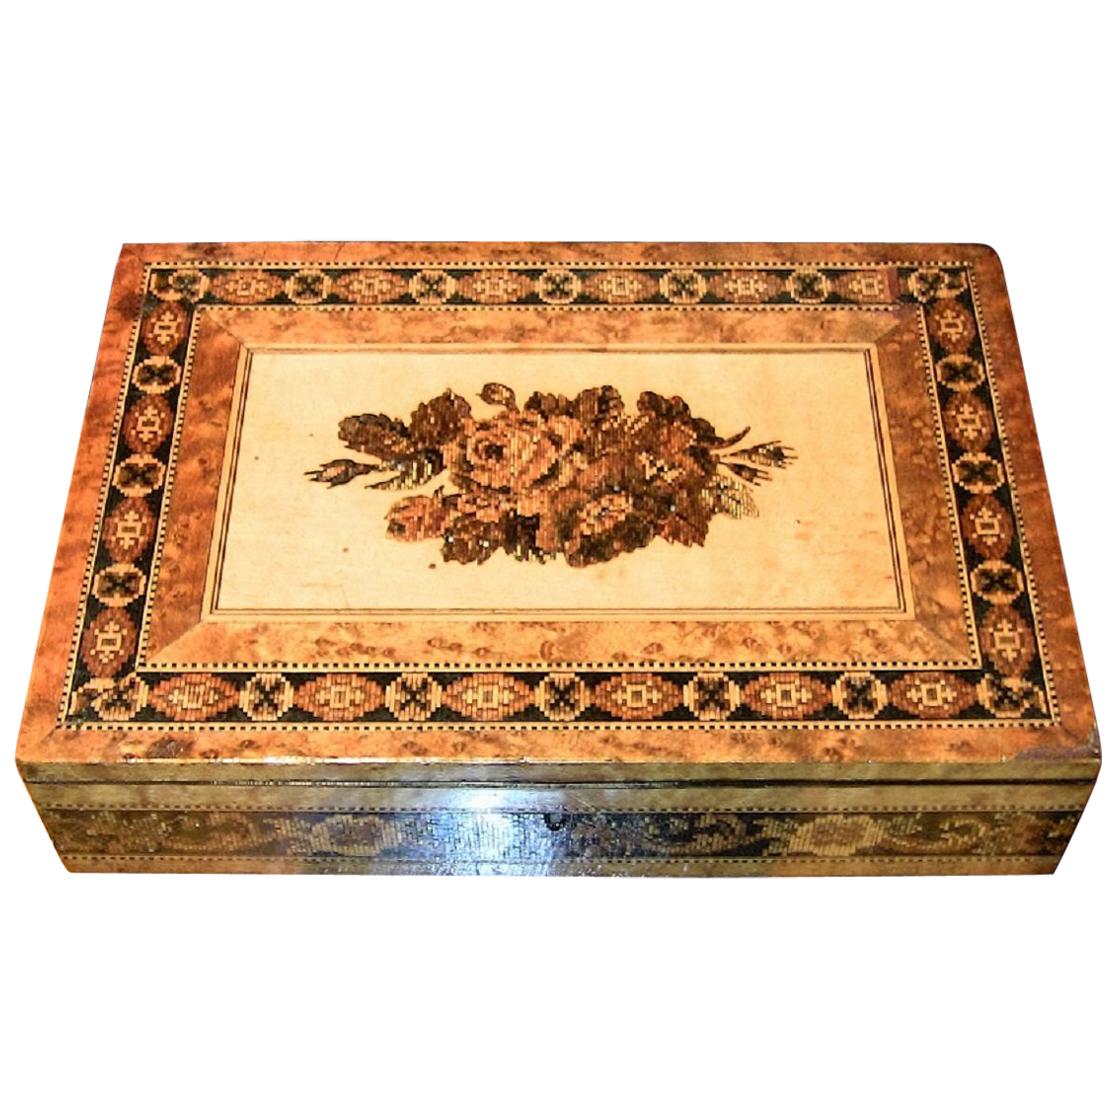 Englische Tunbridge-Tischplattenschachtel aus dem 19. Jahrhundert, Mikro-Mosaik